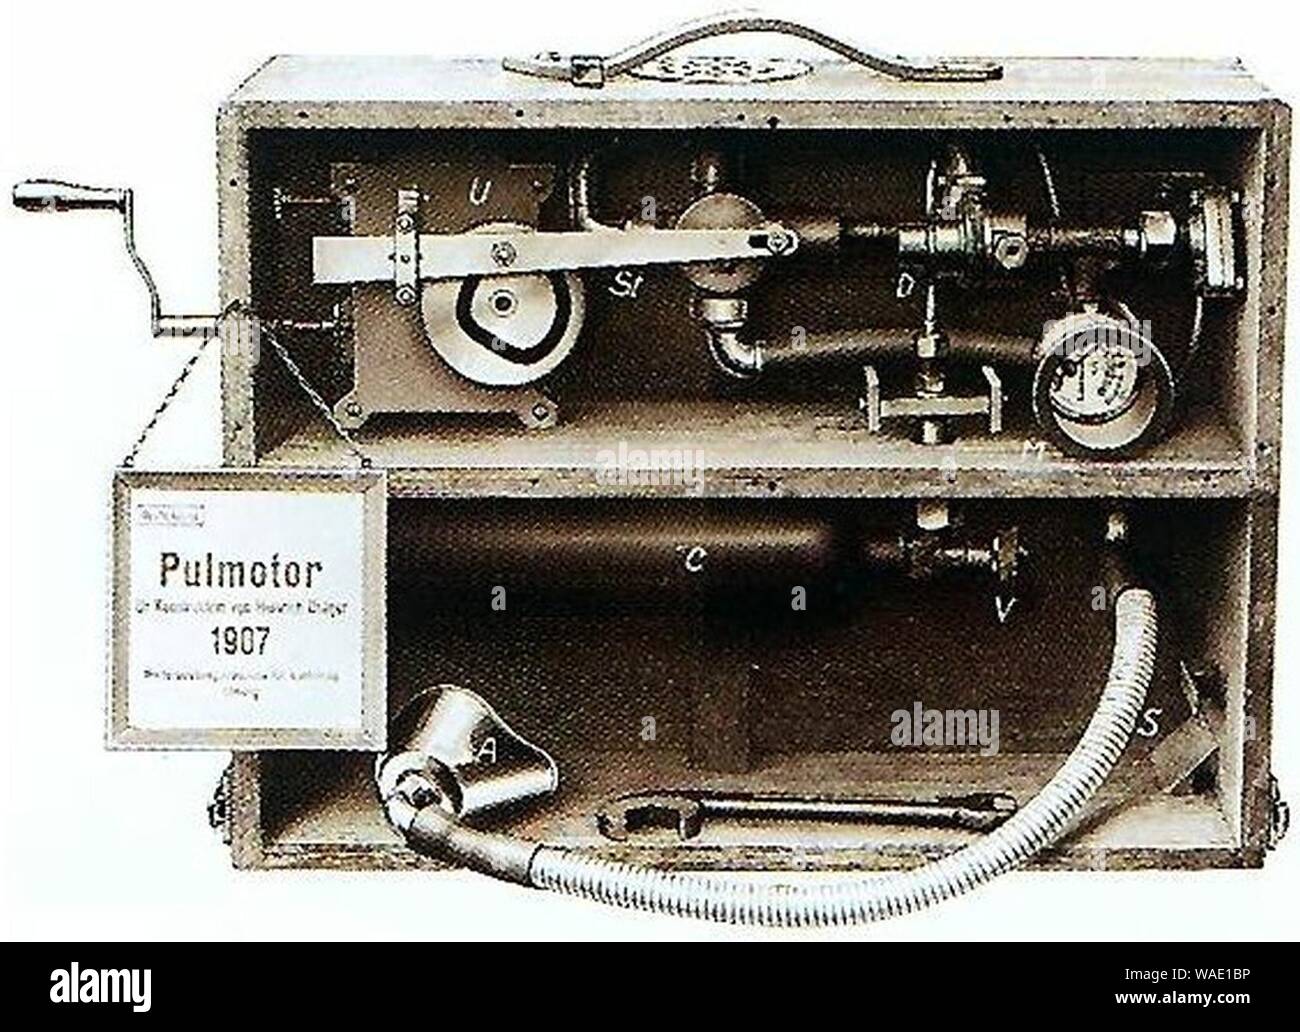 Drager-Pulmotor. Stock Photo